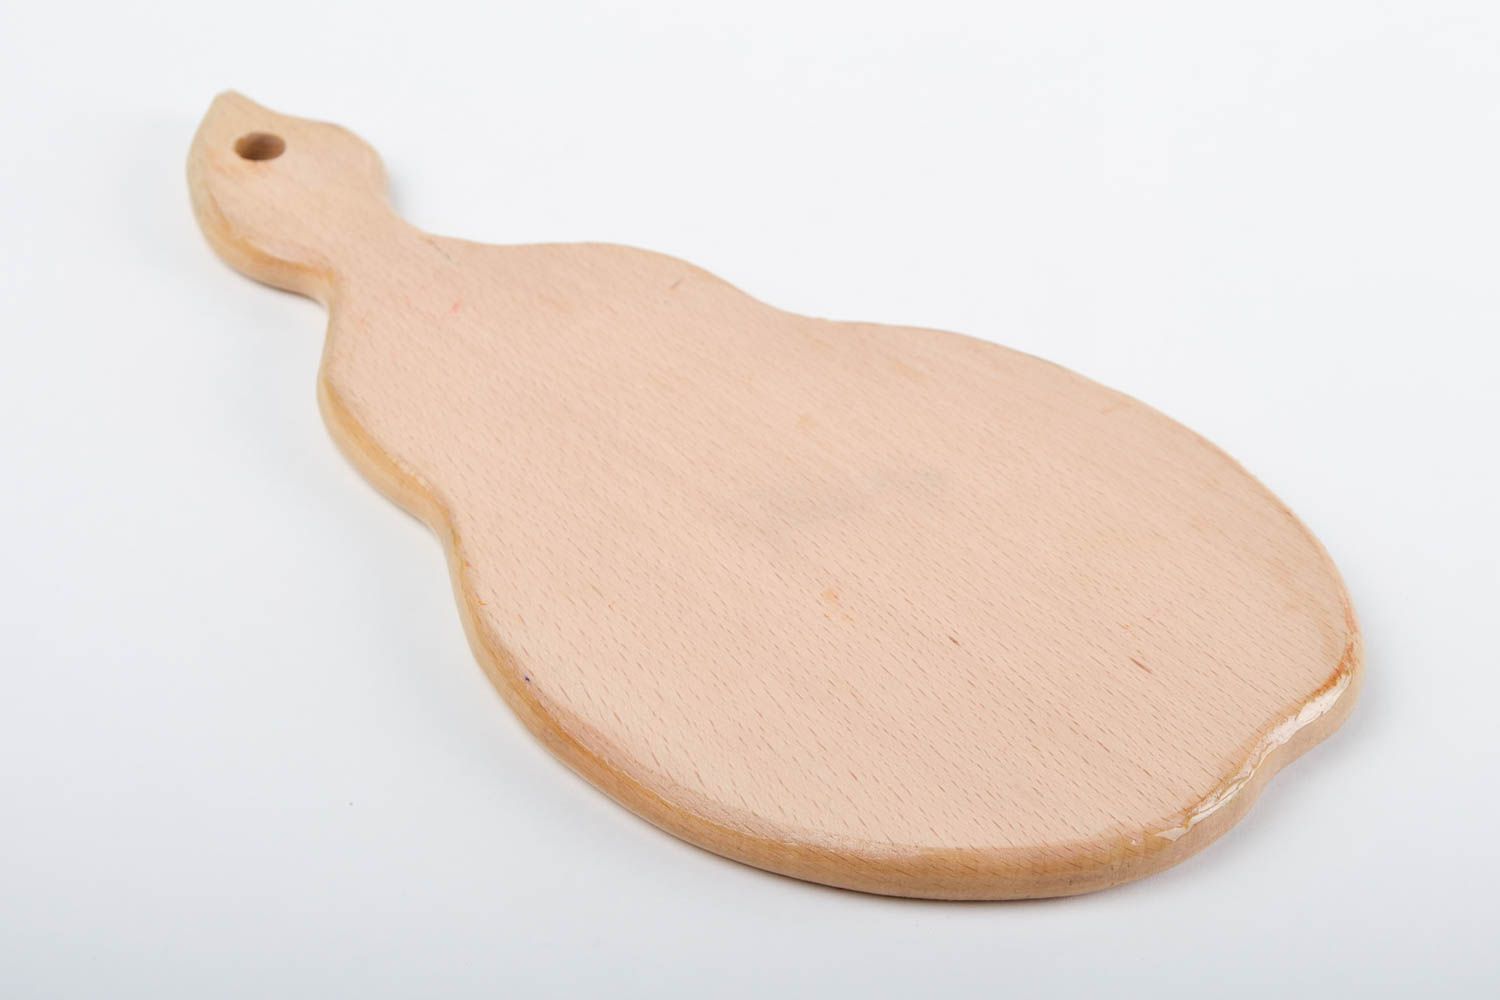 Handmade wooden chopping board woodwork ideas cutting board kitchen supplies photo 5